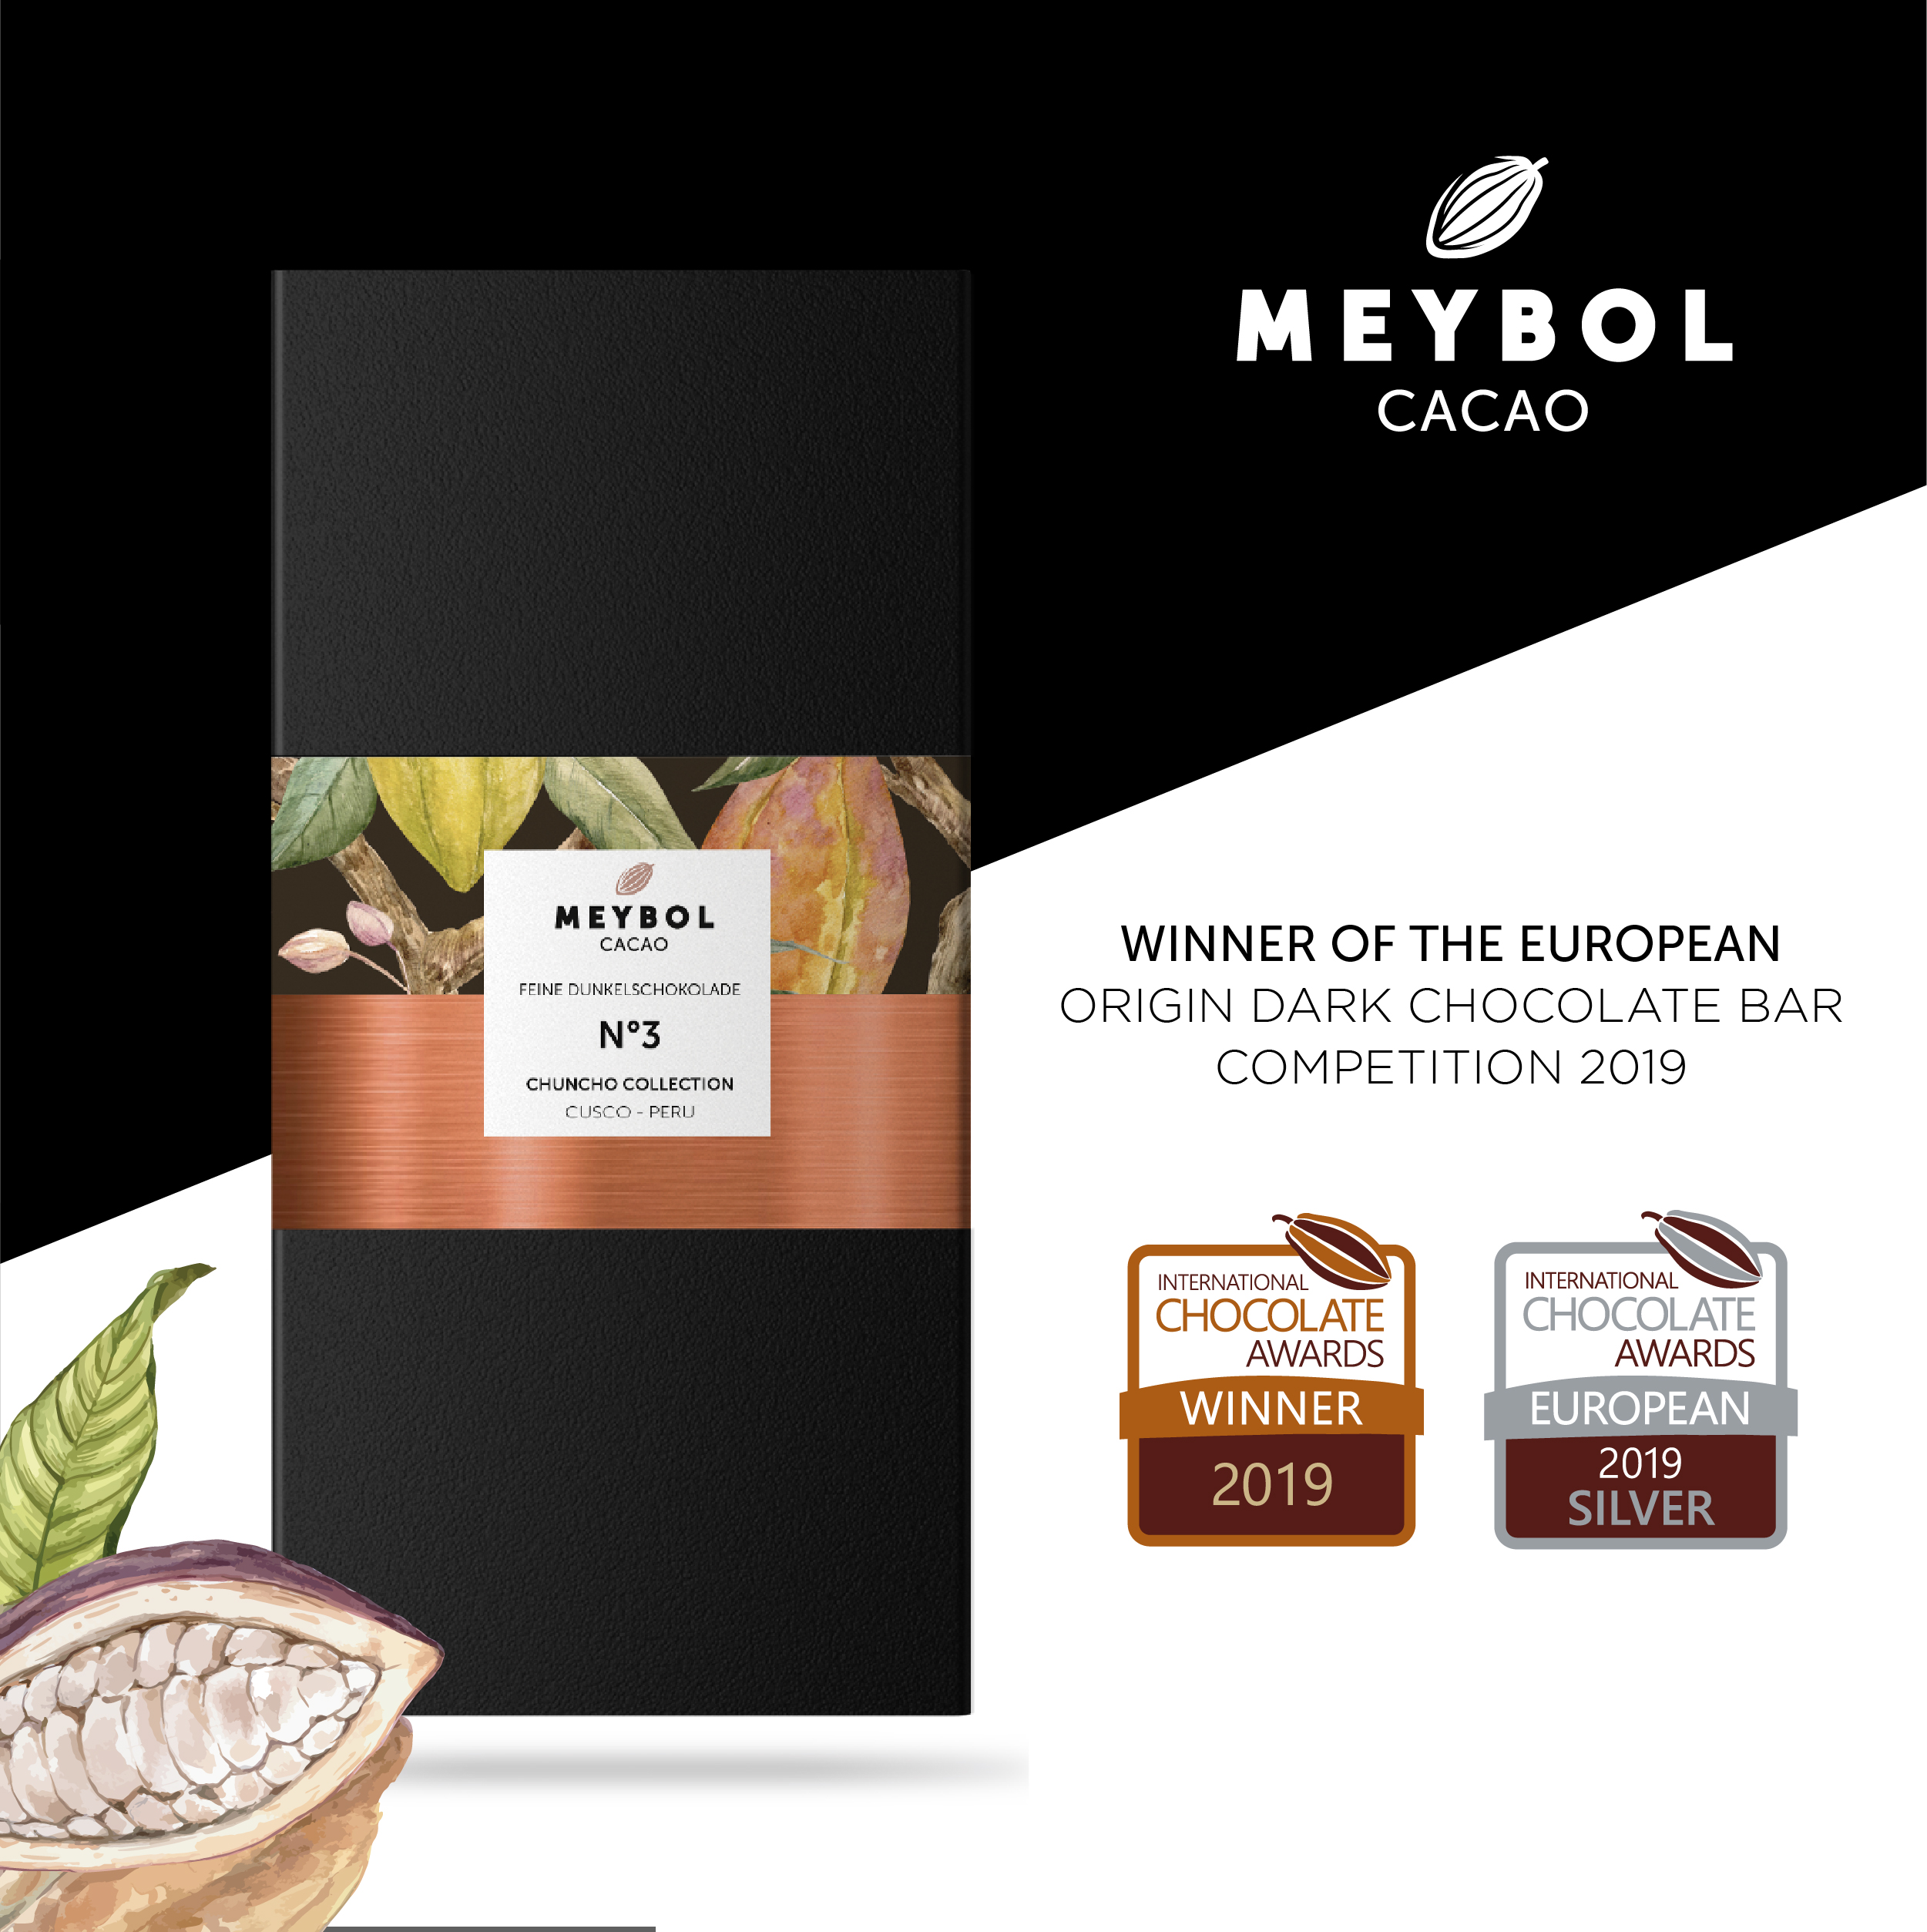 MEYBOL Cacao | Schokolade »Chuncho Collection N°3 - Peru« 72% | 70g